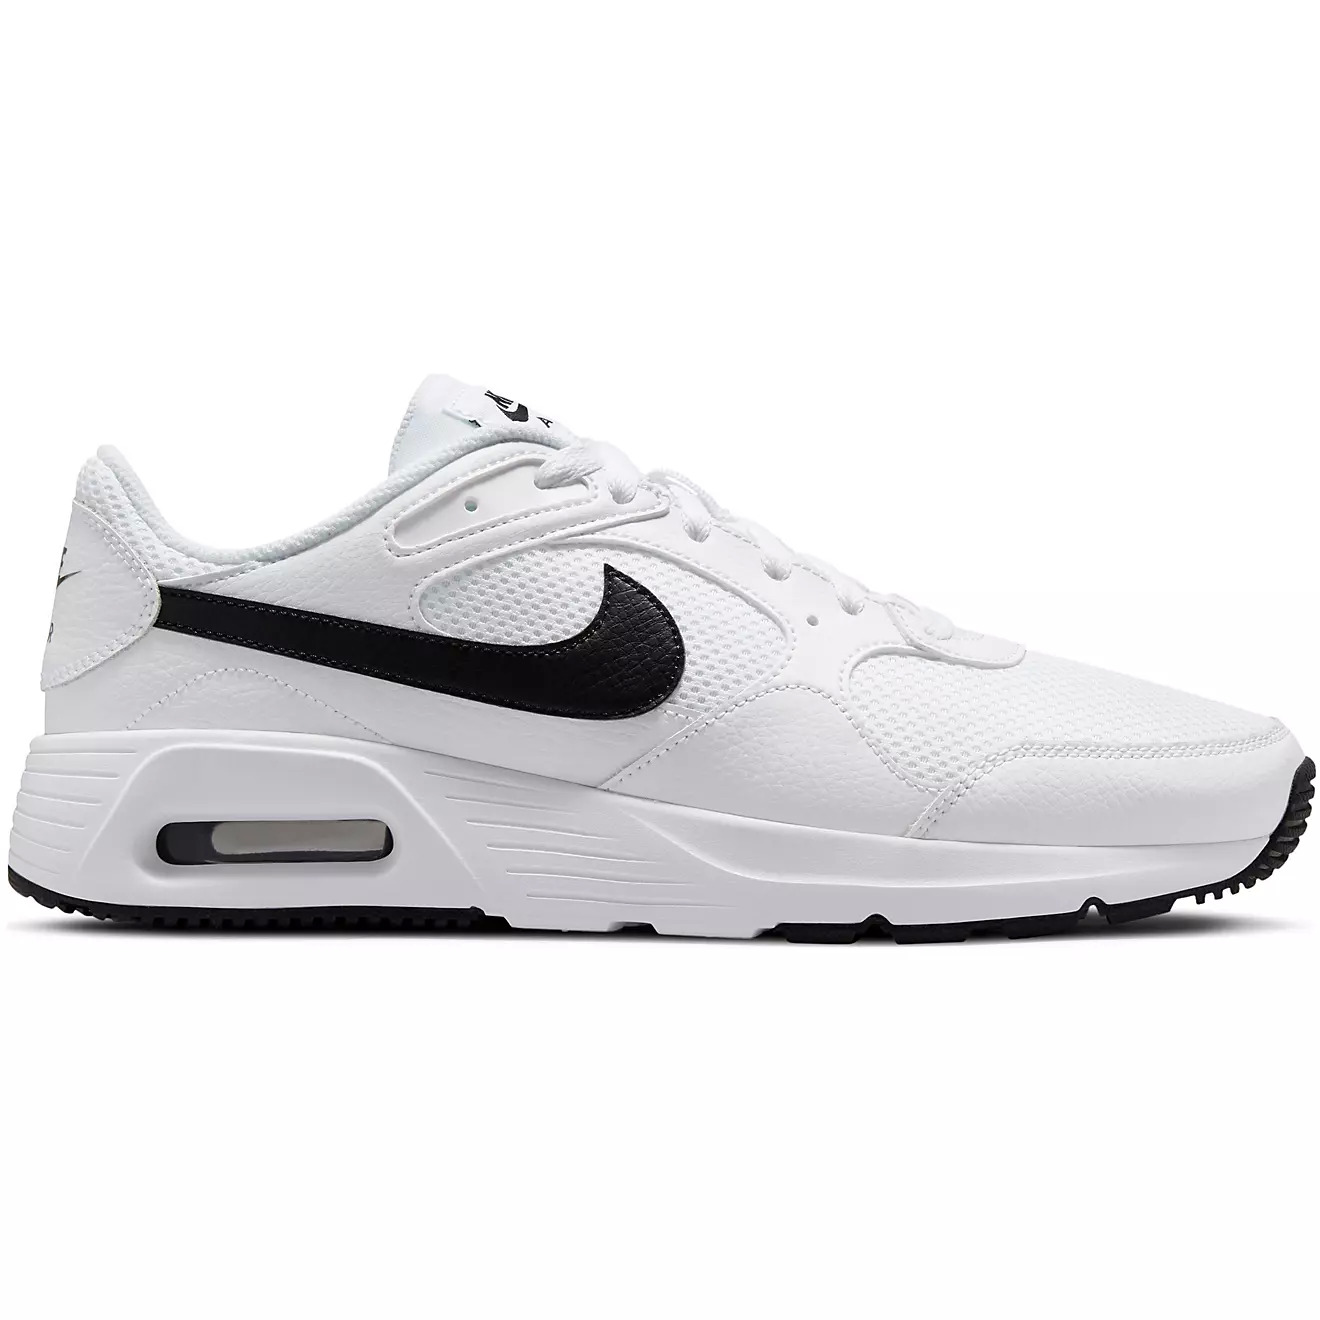 Nike Men's Air Max SC Running Shoes $49.97 + Free Shipping Colors: White/Black-White & Black/White 01